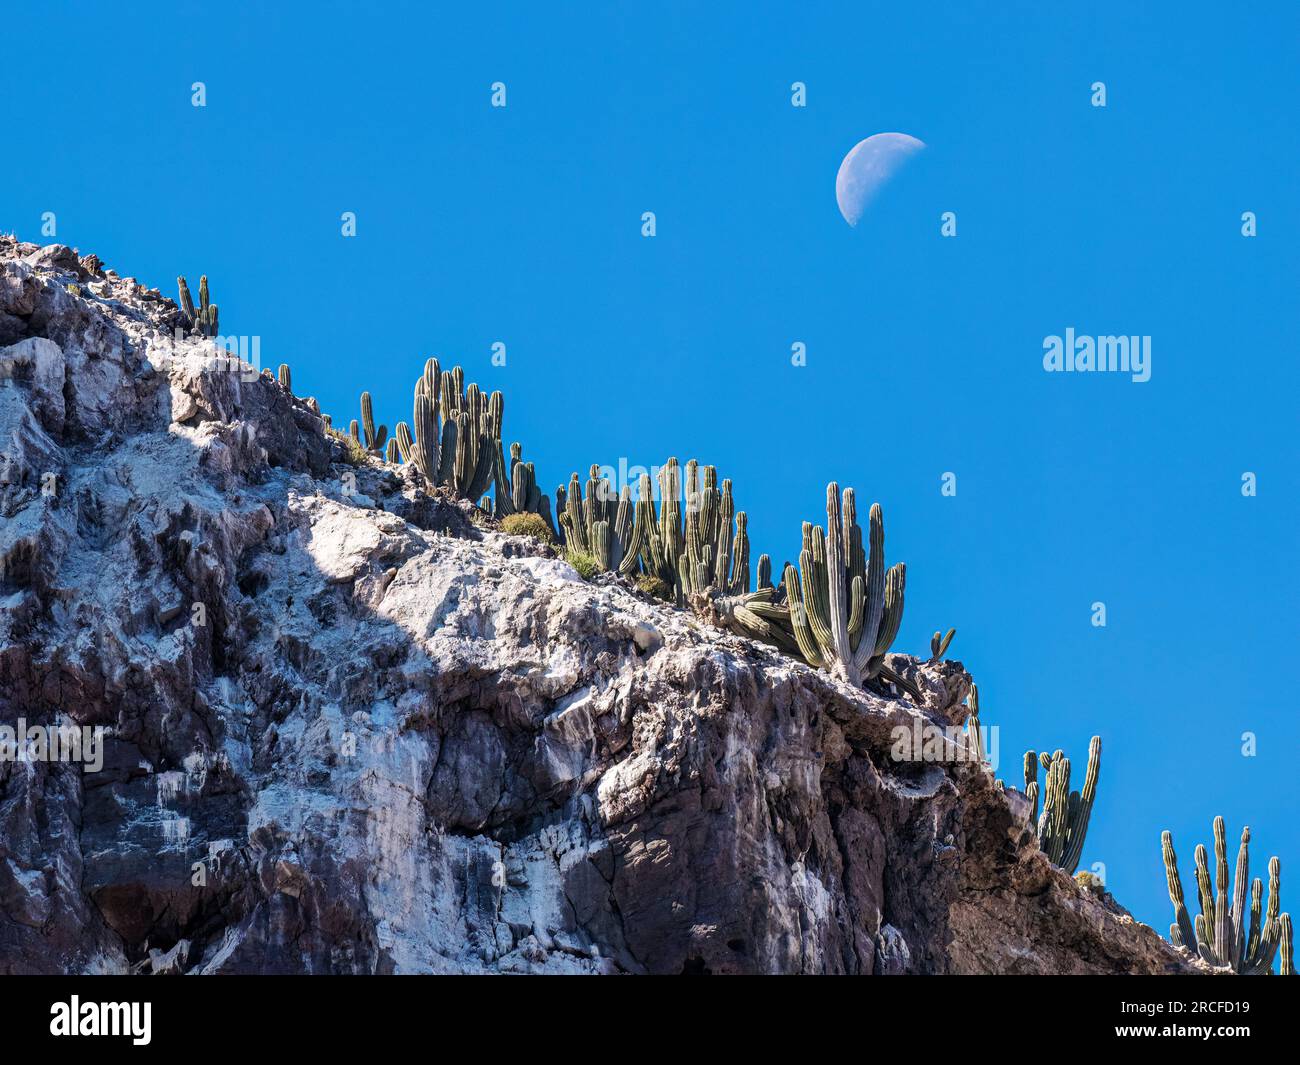 Quarter moon setting over cardon cactus forest on Isla San Pedro Martir, Baja California, Mexico. Stock Photo